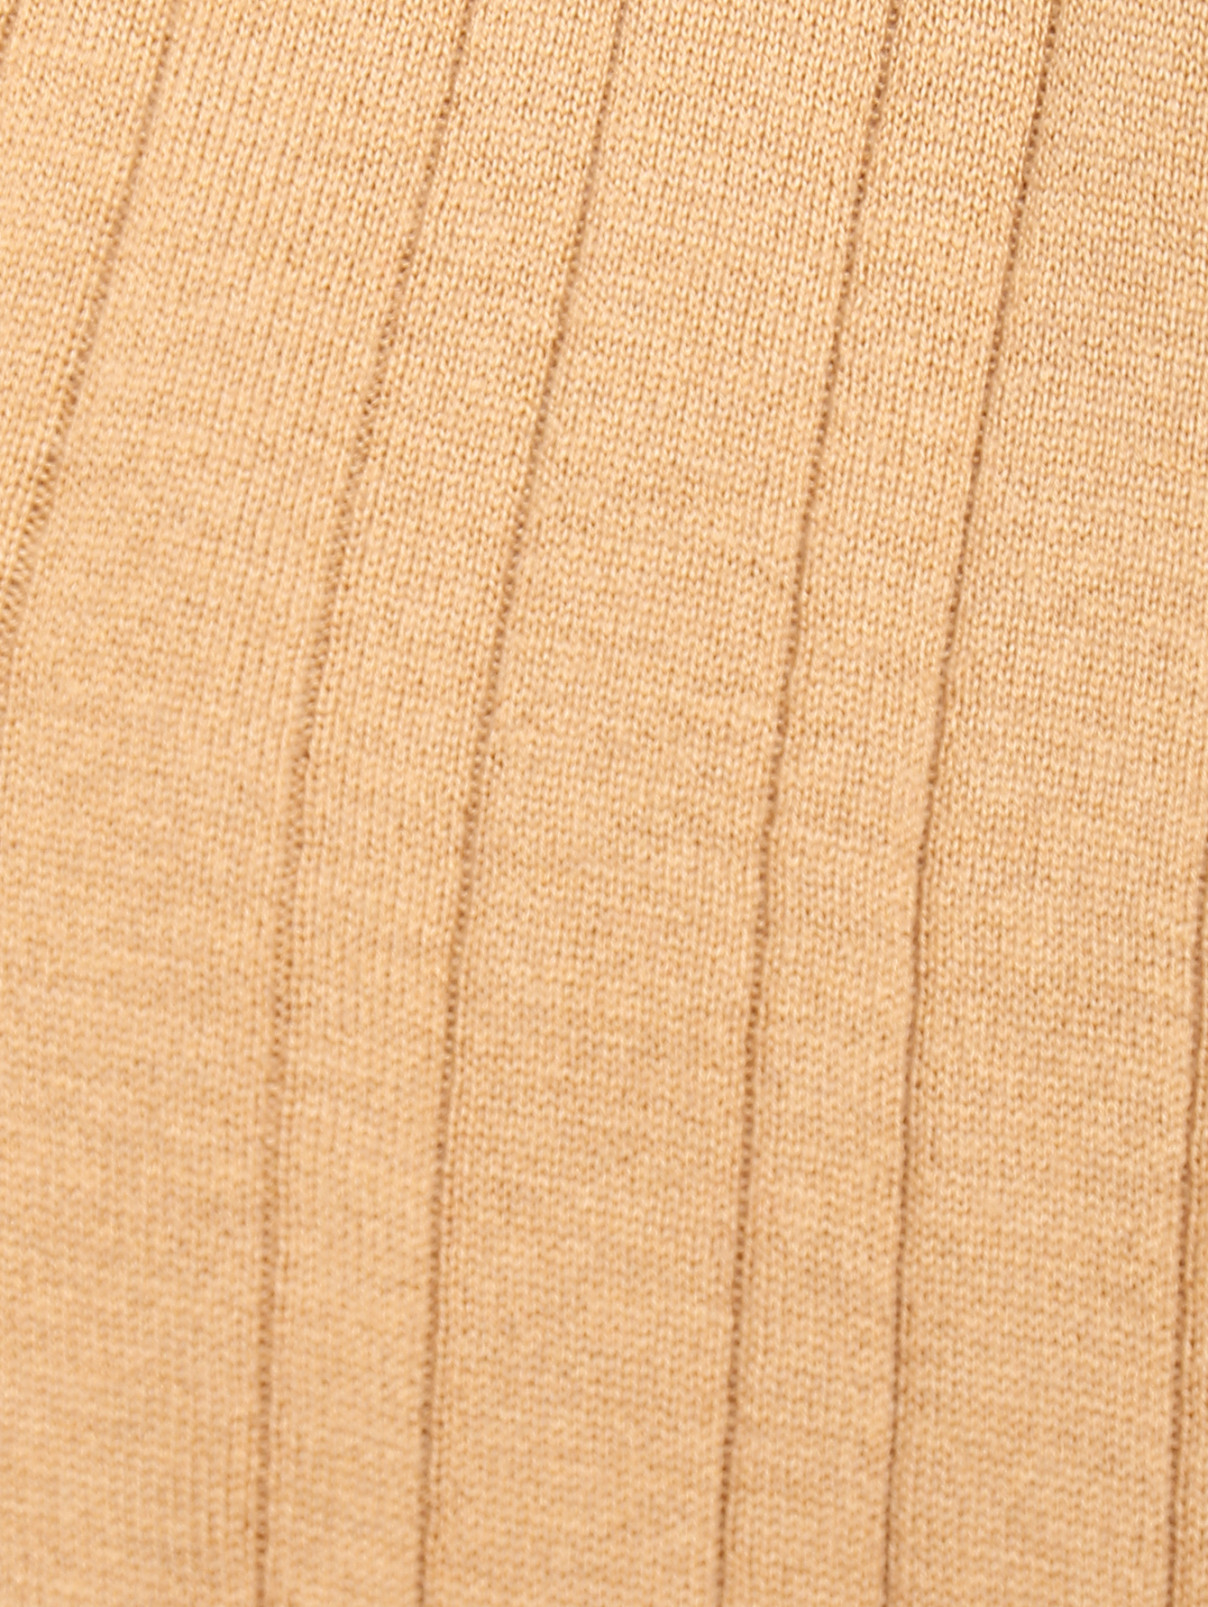 Джемпер из шелка и шерсти Max Mara  –  Деталь  – Цвет:  Бежевый